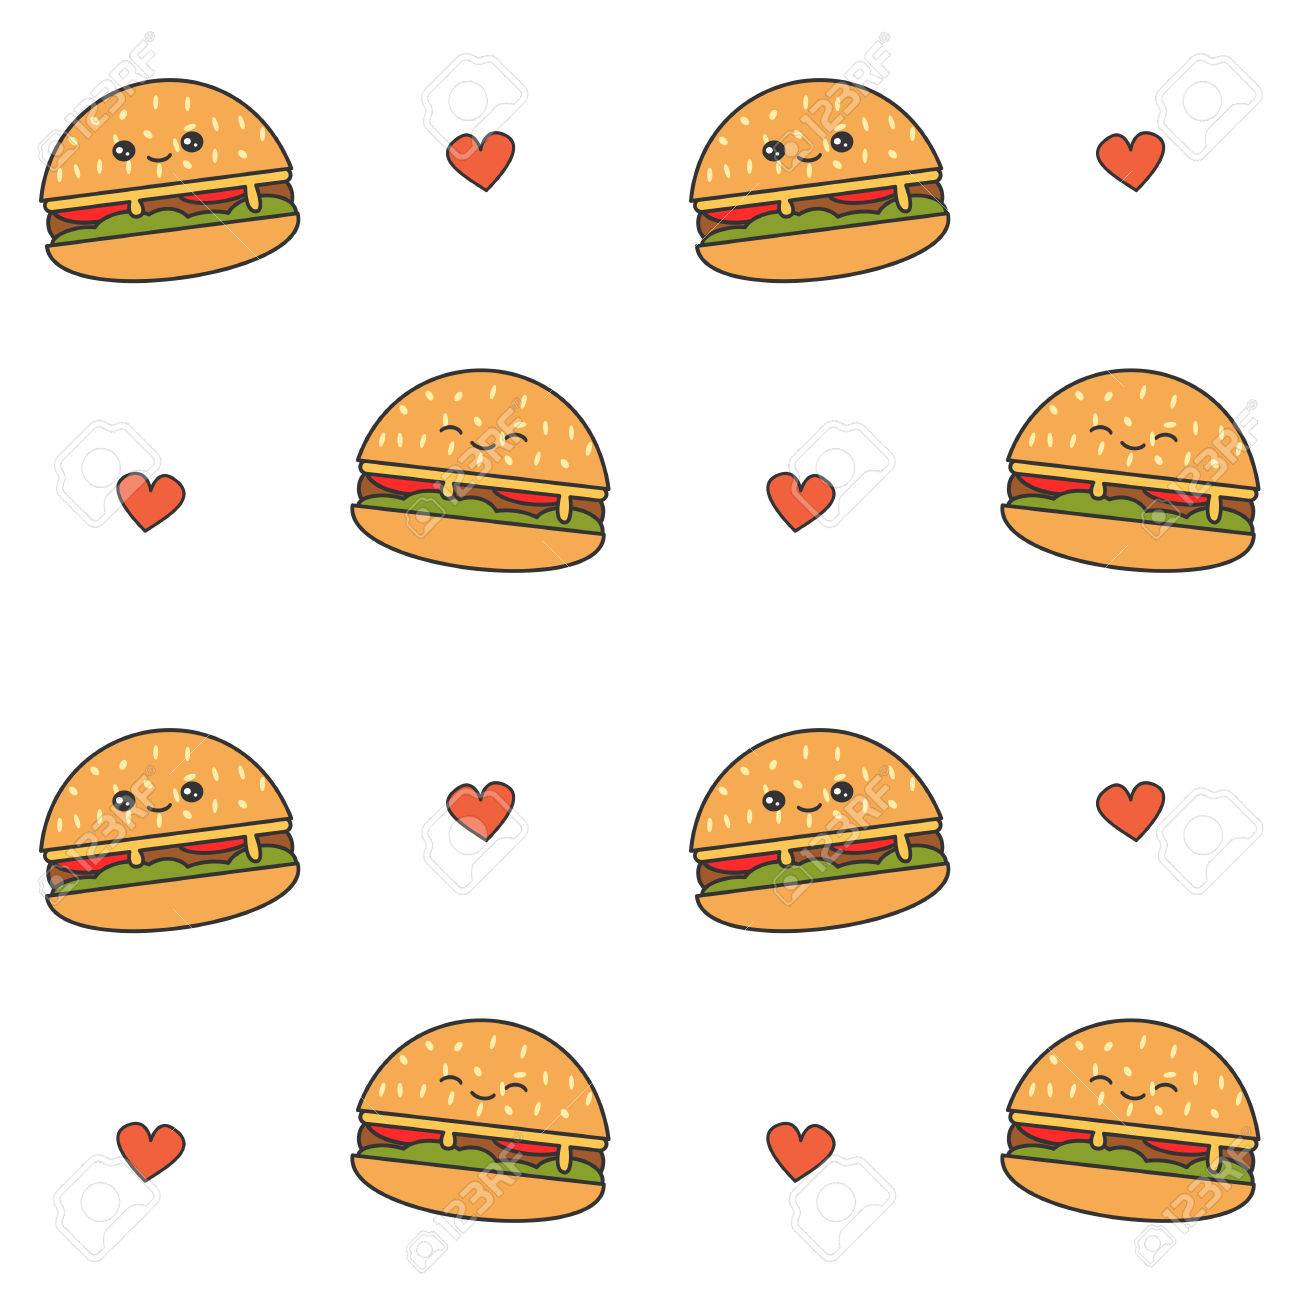 Cute Cartoon Cheeseburgers Seamless Vector Pattern Background